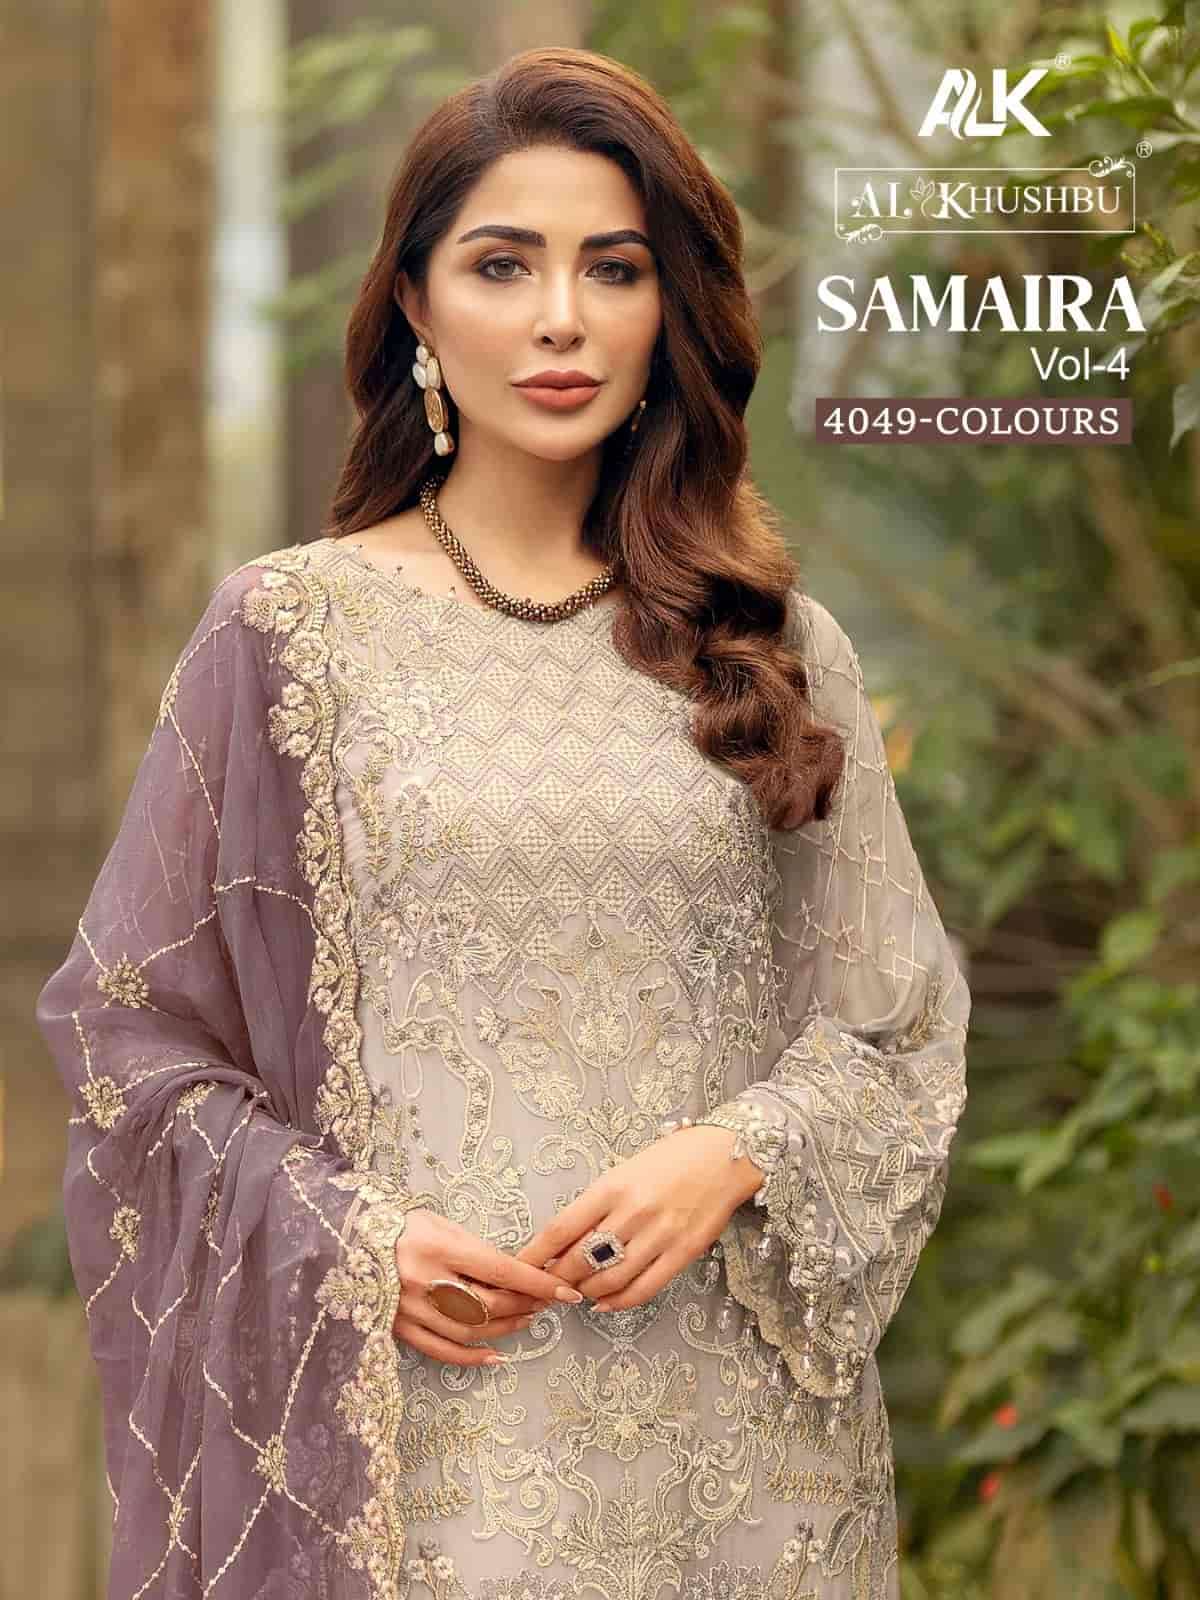 Al Khushbu Samaira Vol 4 4049 Colors Exclusive Designer Latest Pakistani Collection